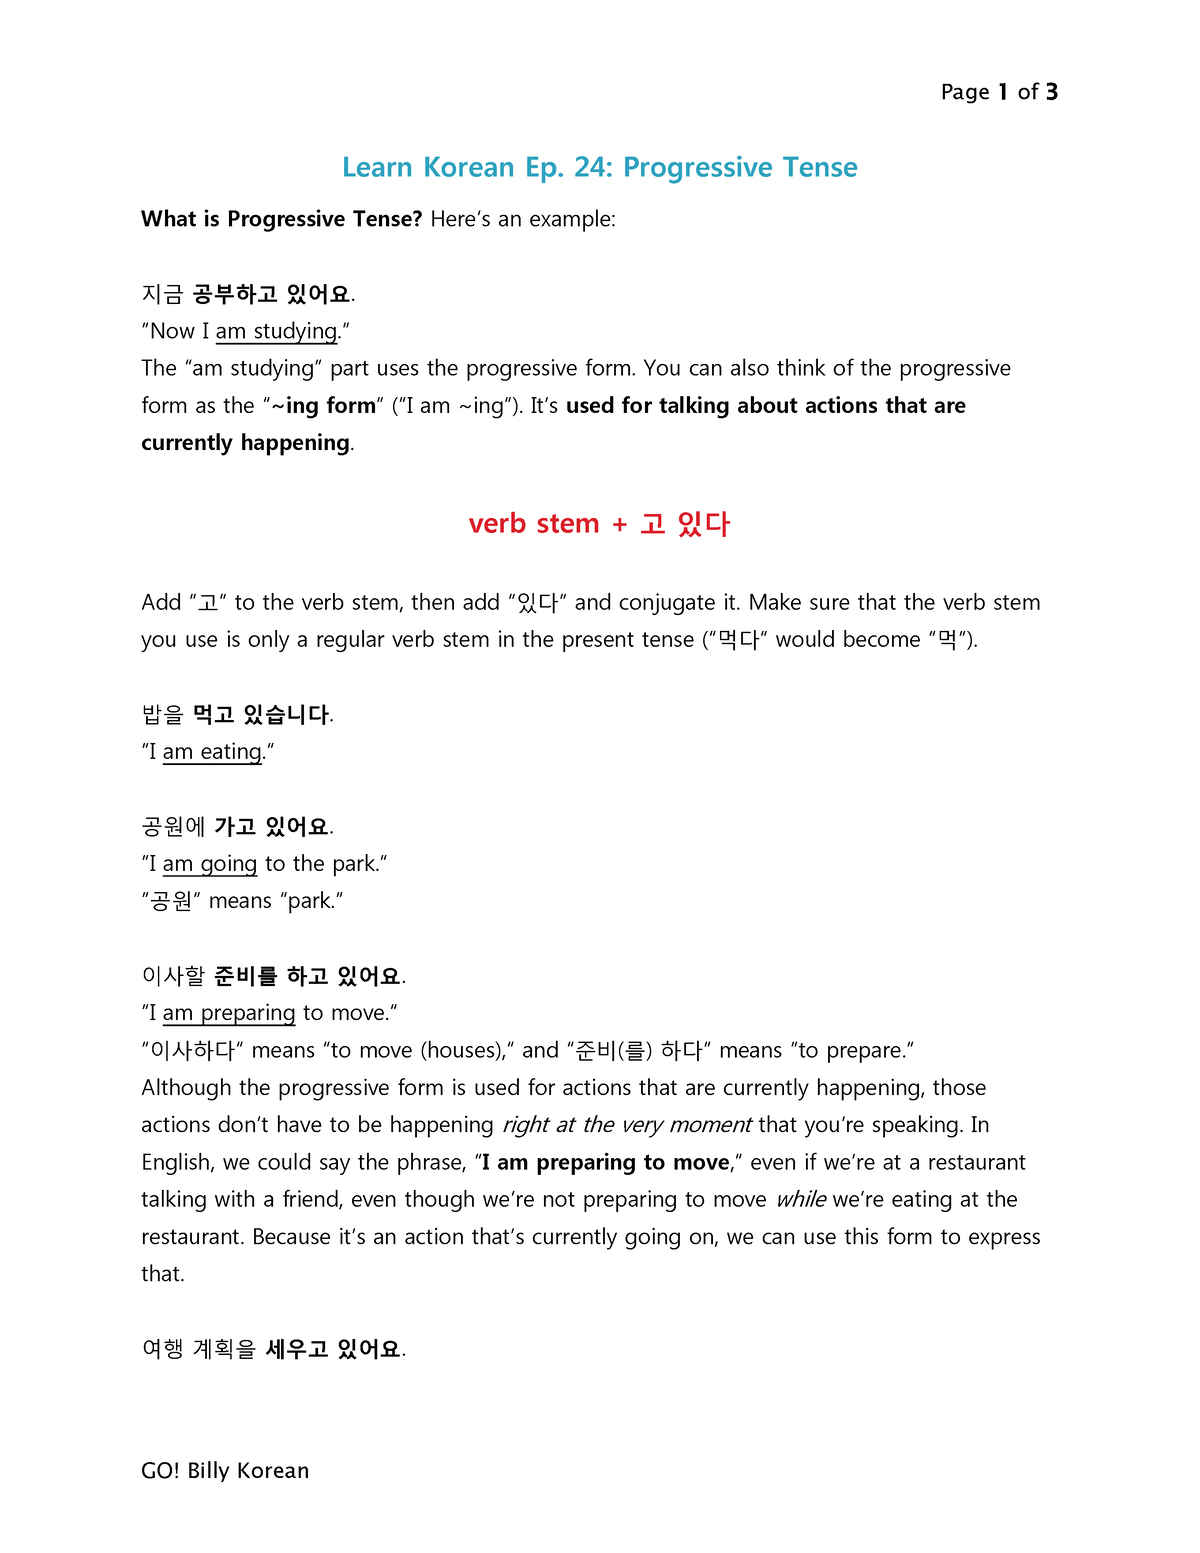 Go Billy Korean Episode 24 - Page 1 of 3 GO! Billy Korean Learn Korean ...